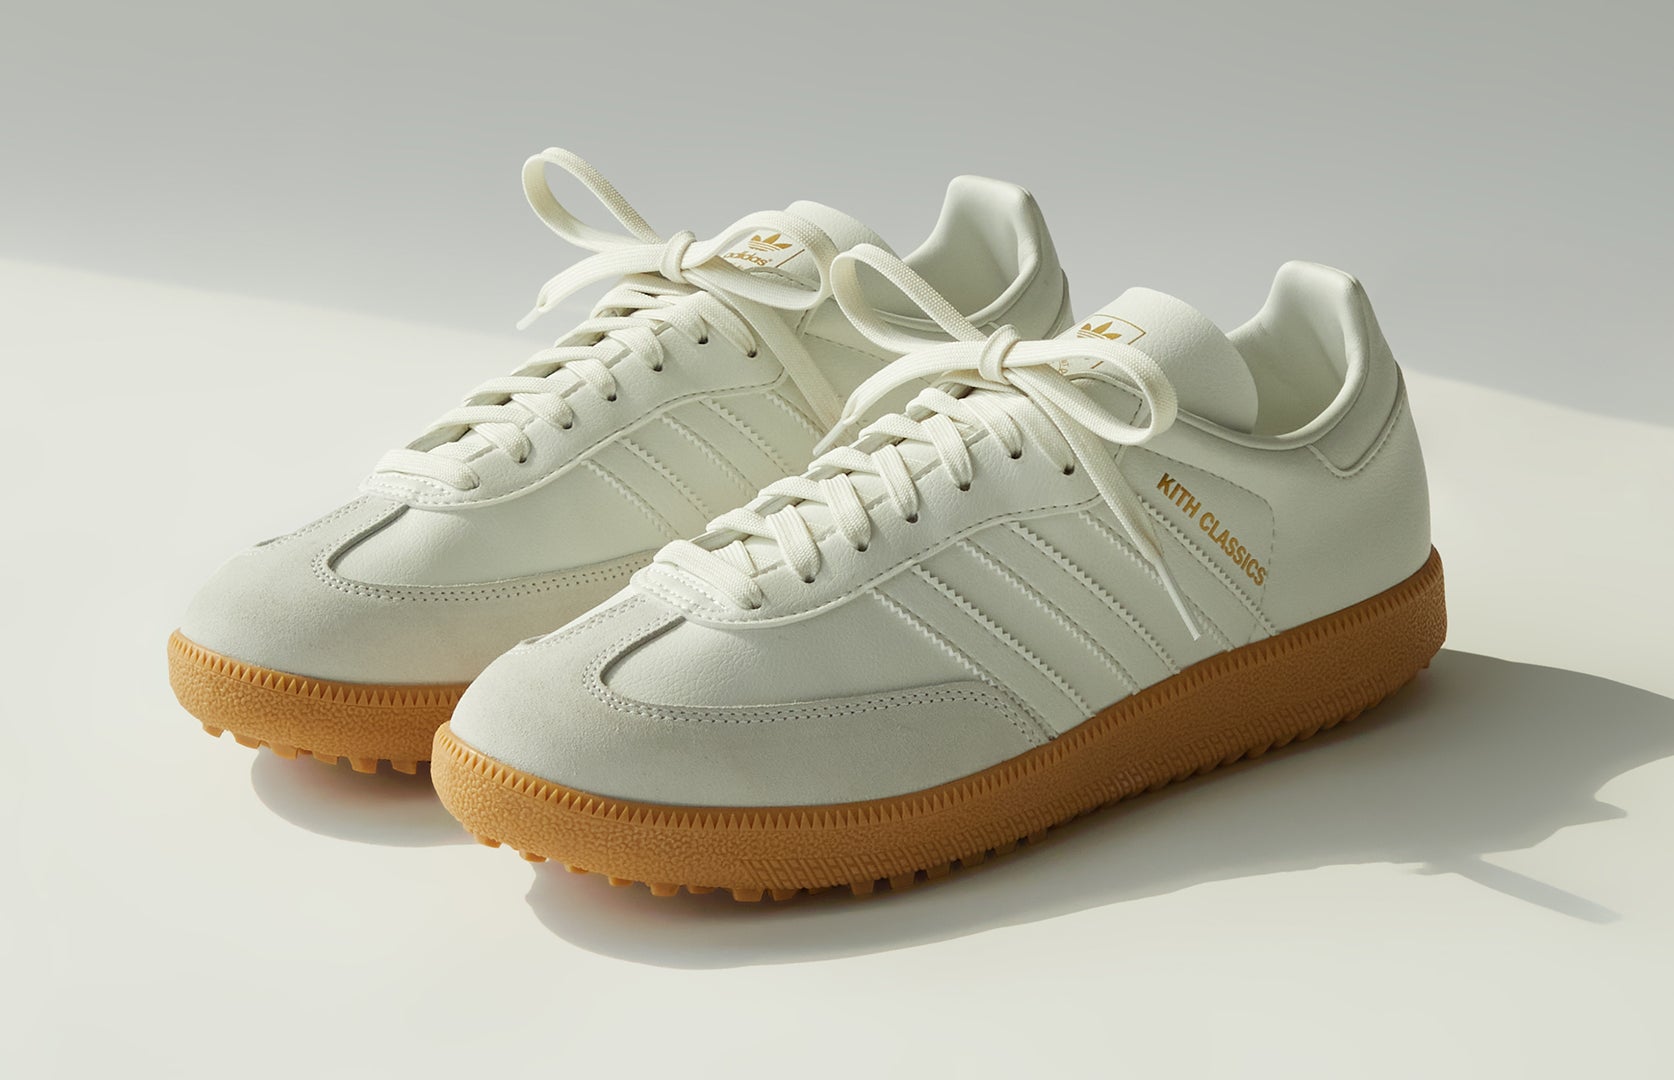 Kith x Adidas Samba Golf Shoe White Gum Release Date Pair